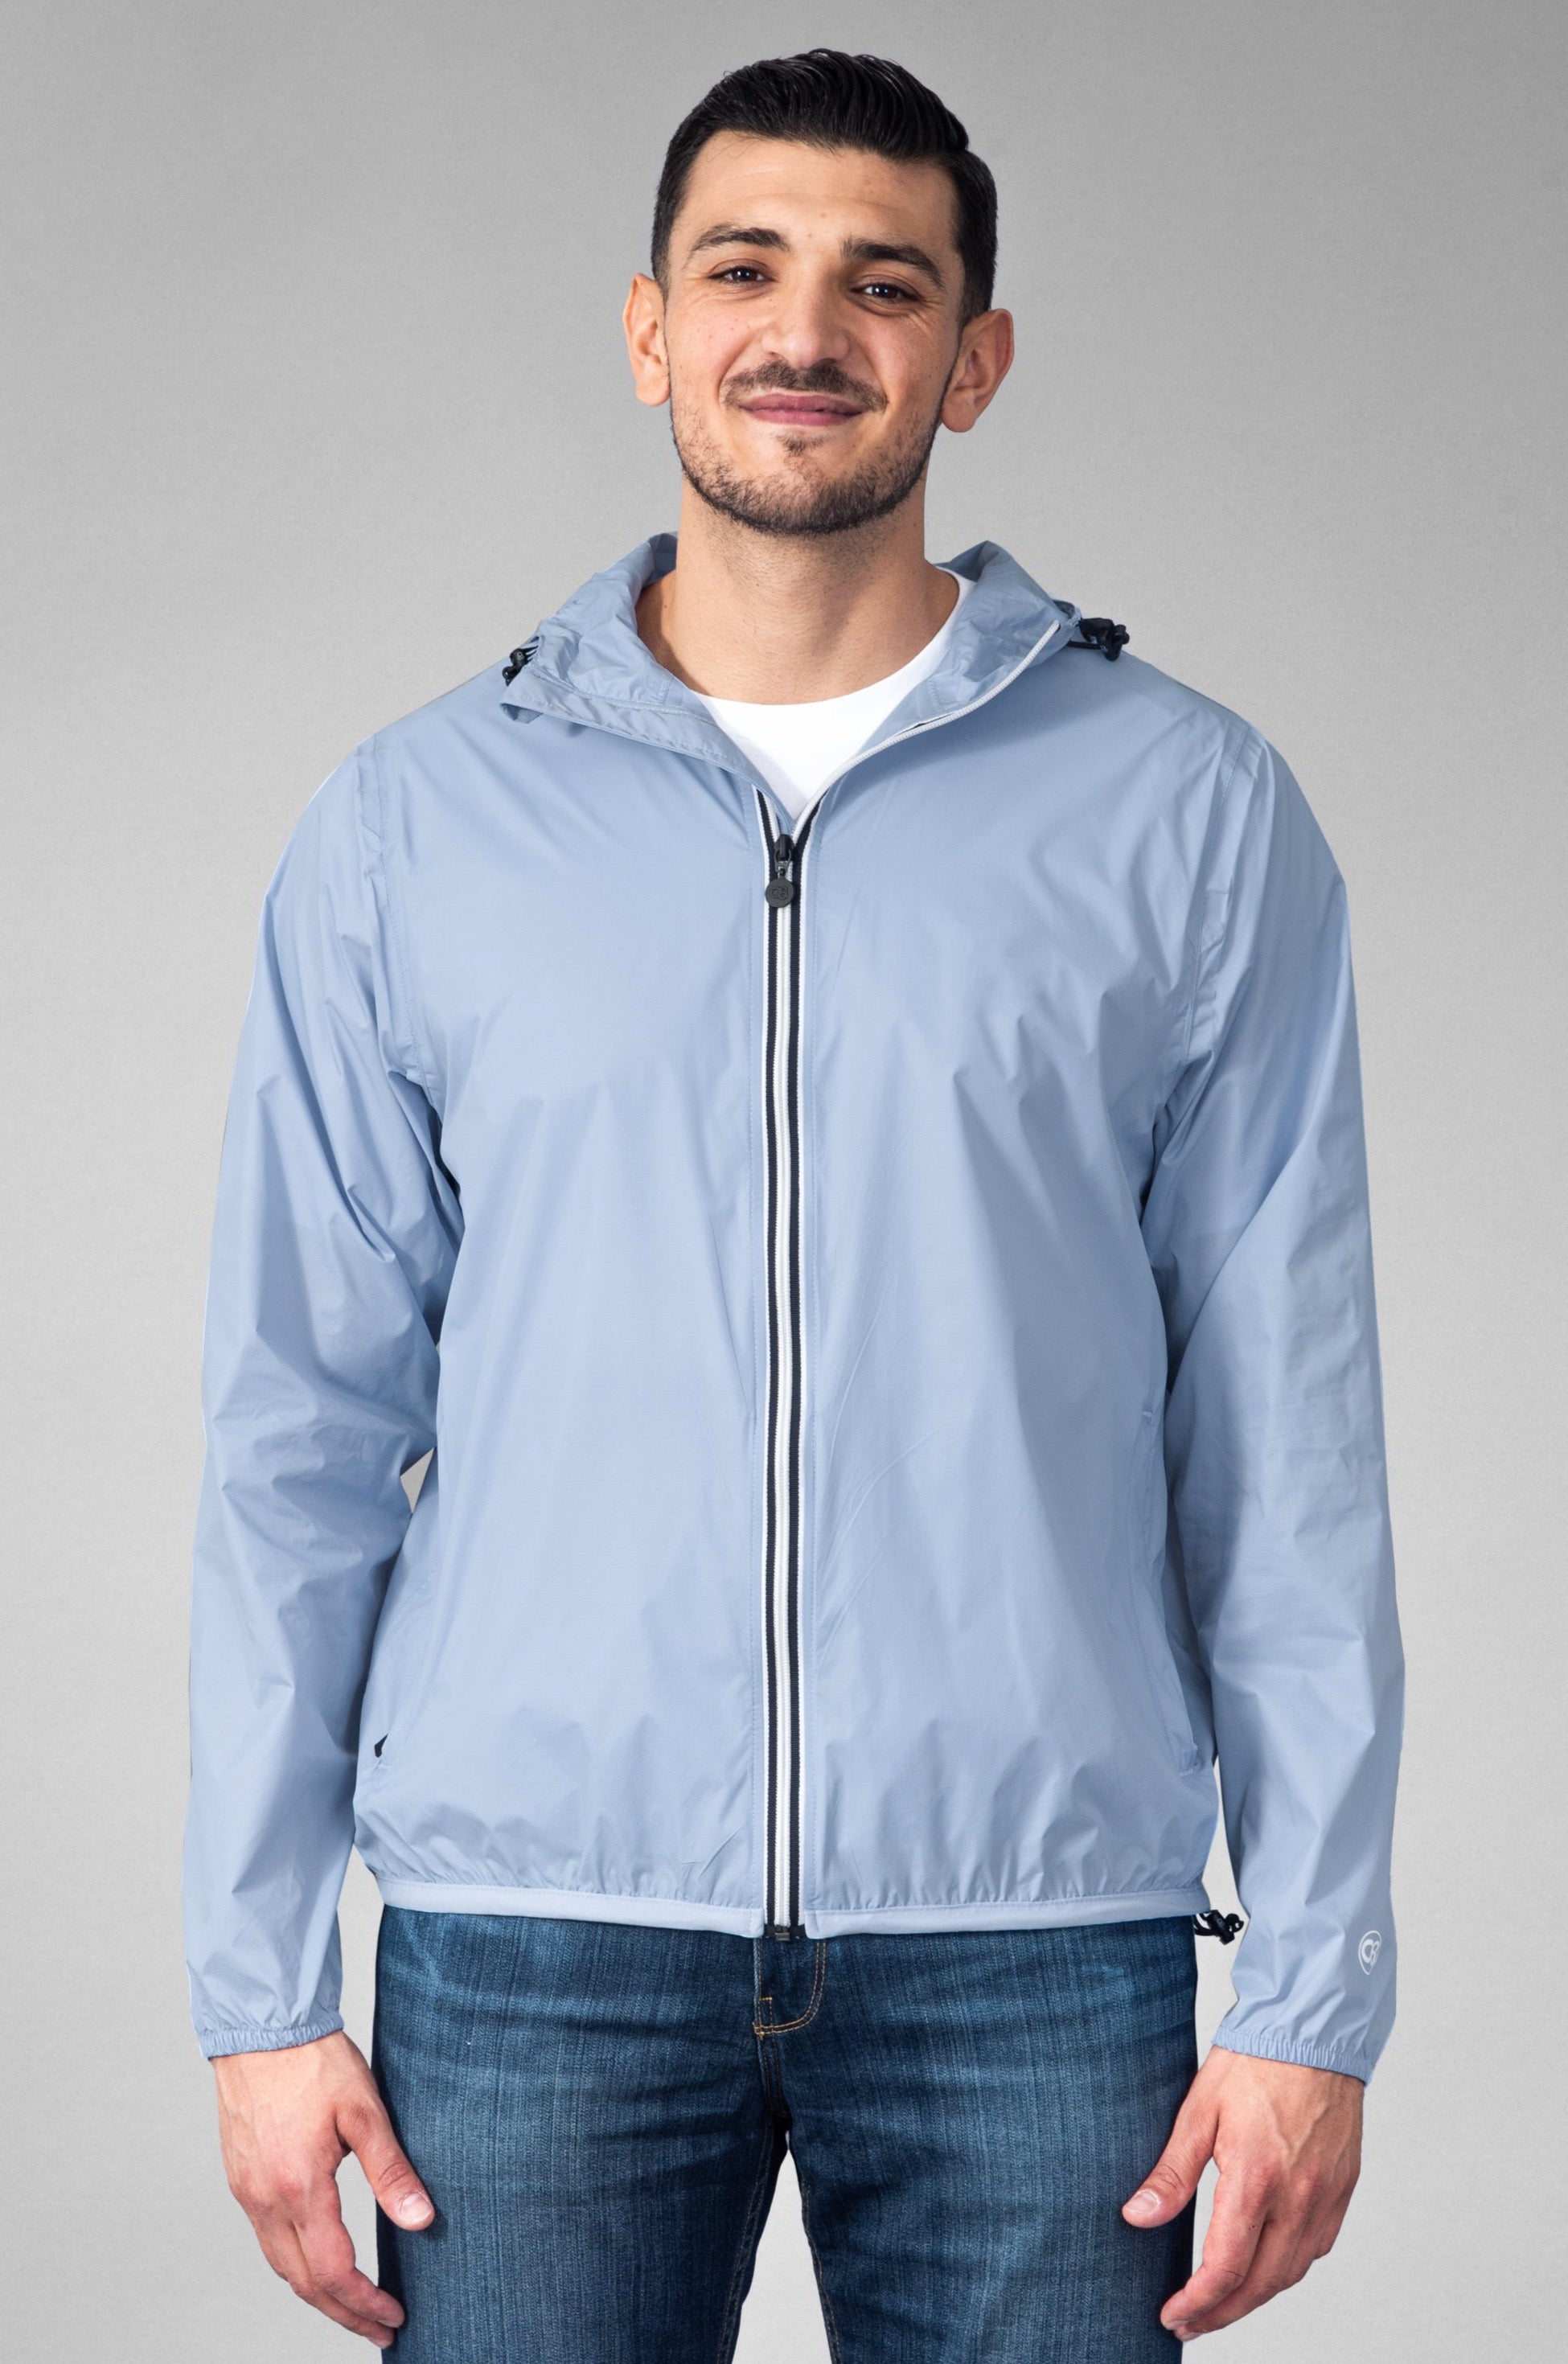 Powder blue full zip packable rain jacket and windbreaker - O8Lifestyle